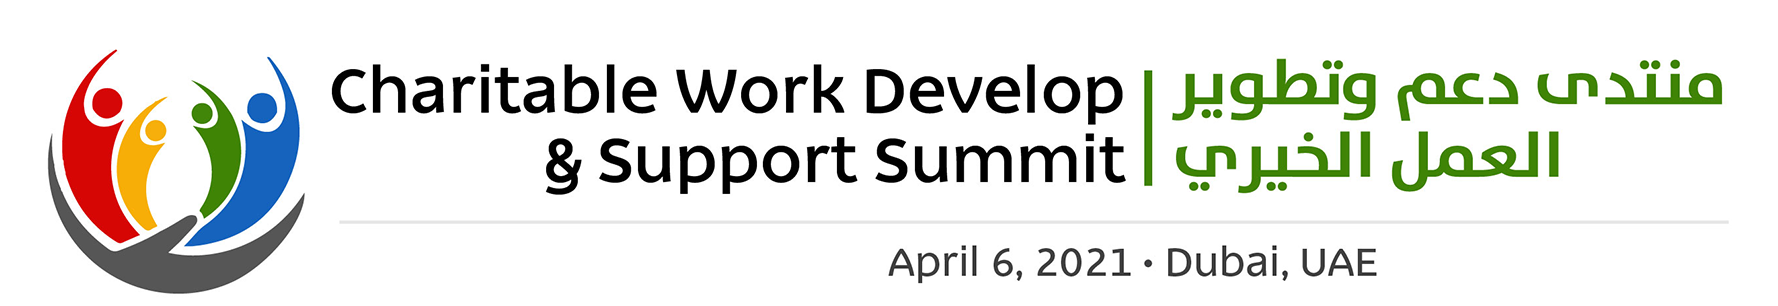 Charitable Work Develop & Support Summit